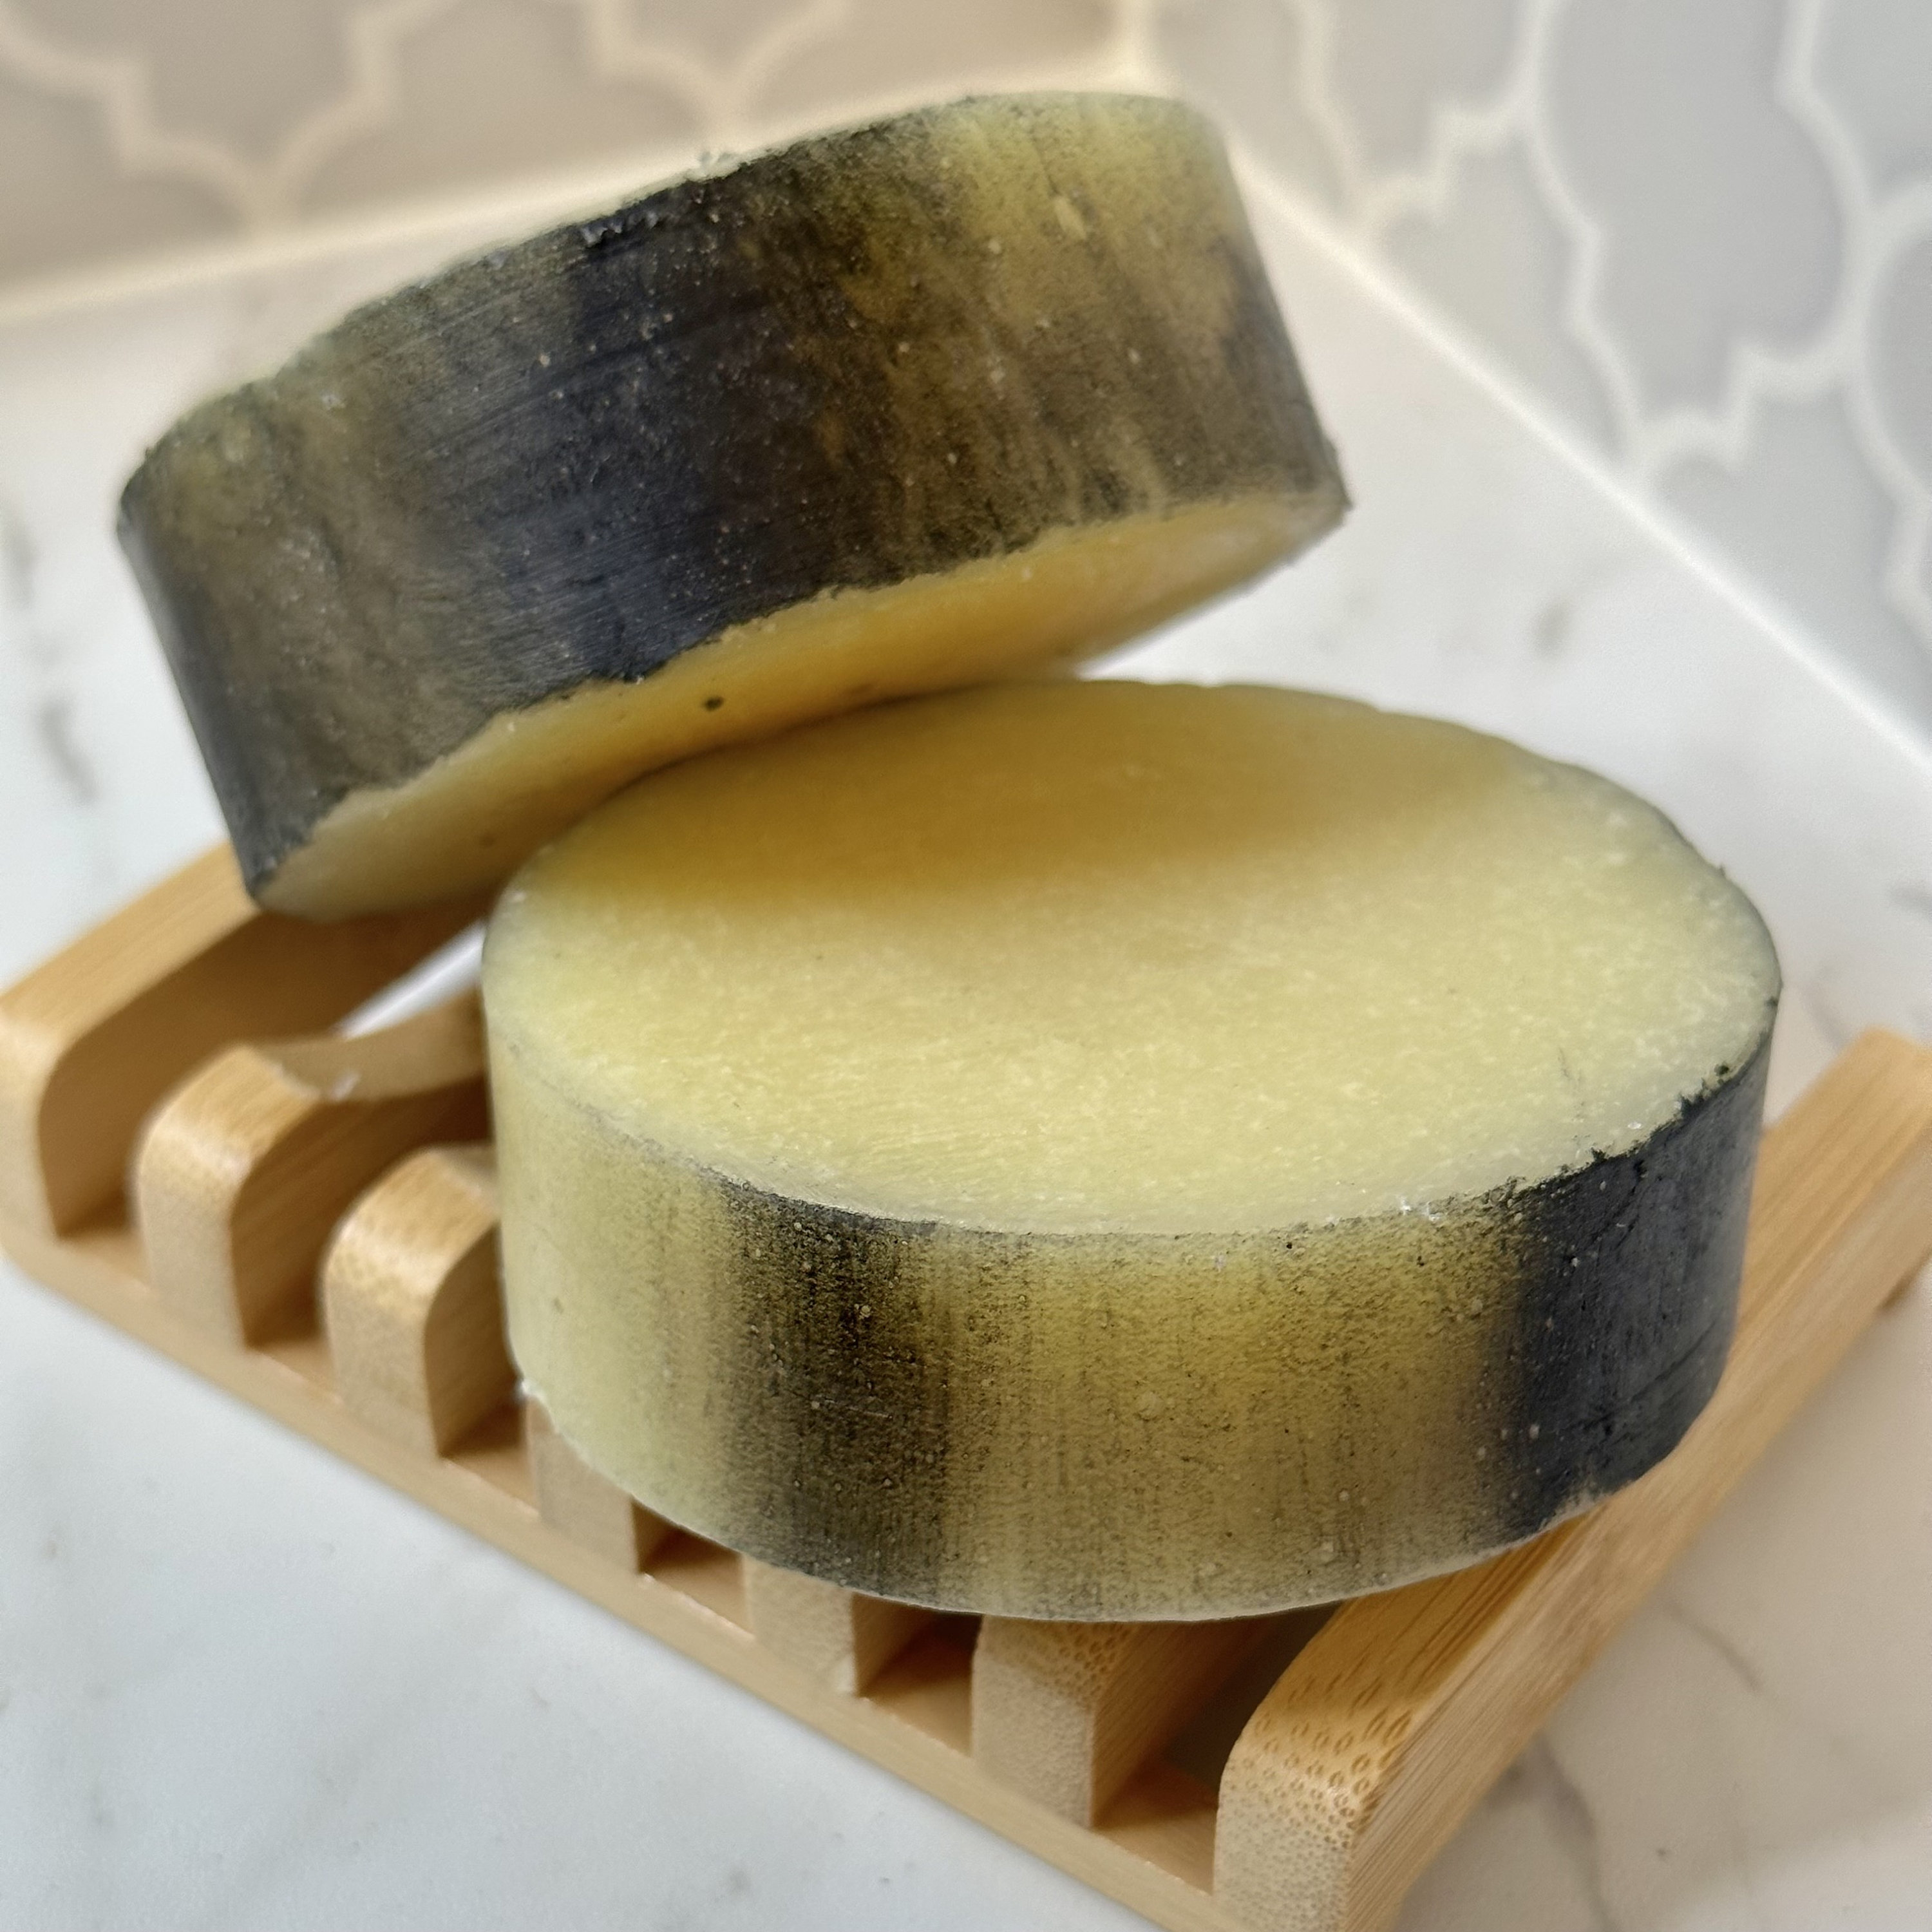 Peppermint Pumice (Exfoliant) Handmade Soap Bar – Appleton Soap Company